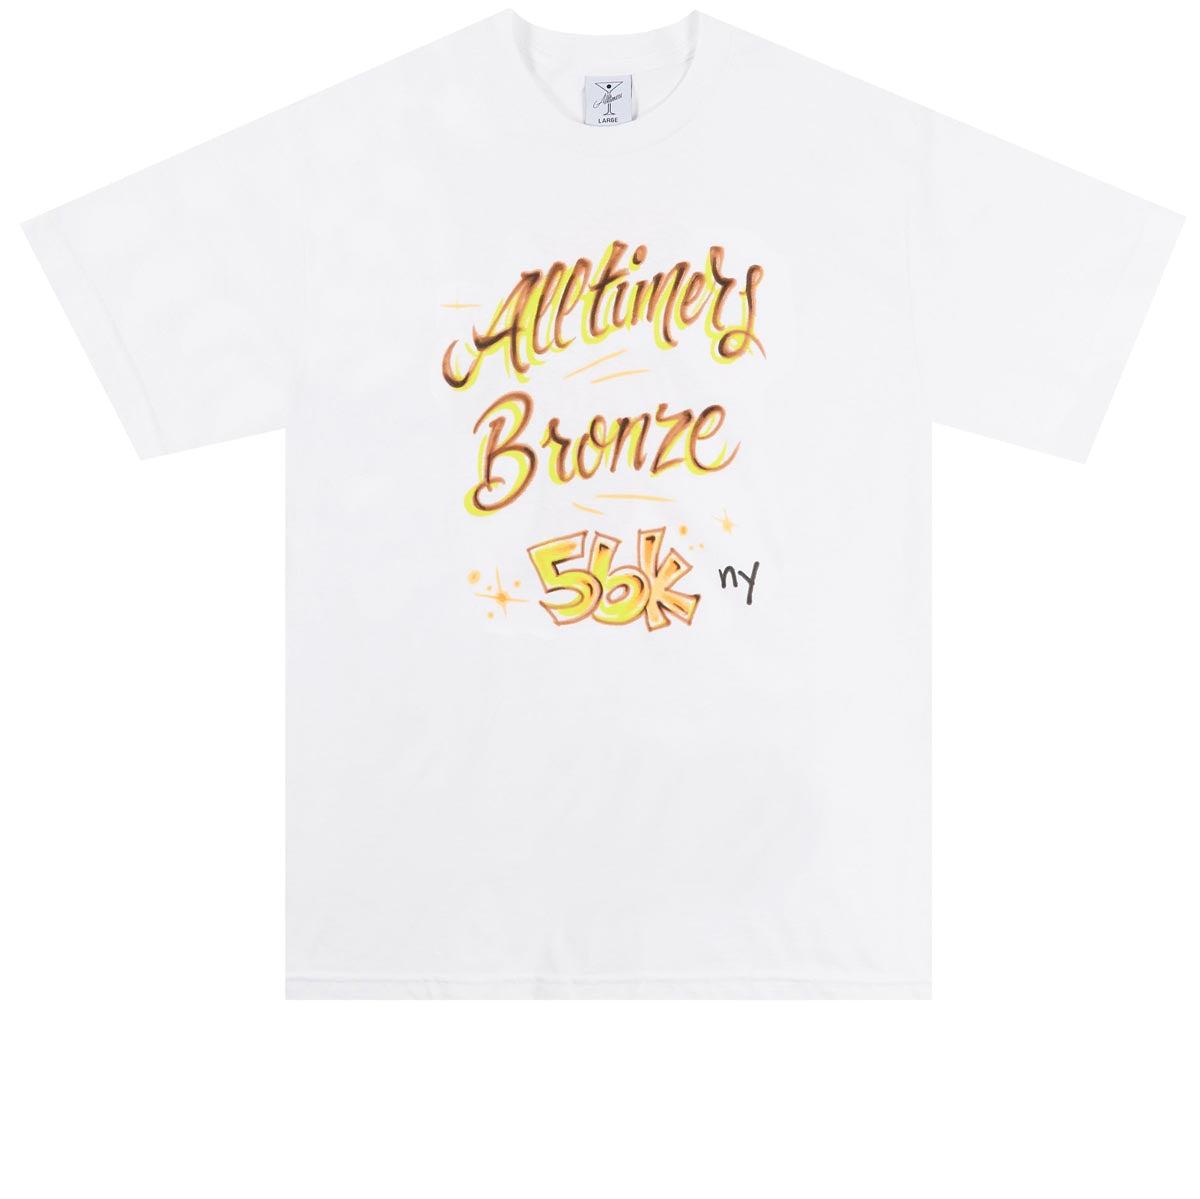 Alltimers x Bronze 56k 56K Lounge T-Shirt - White image 1